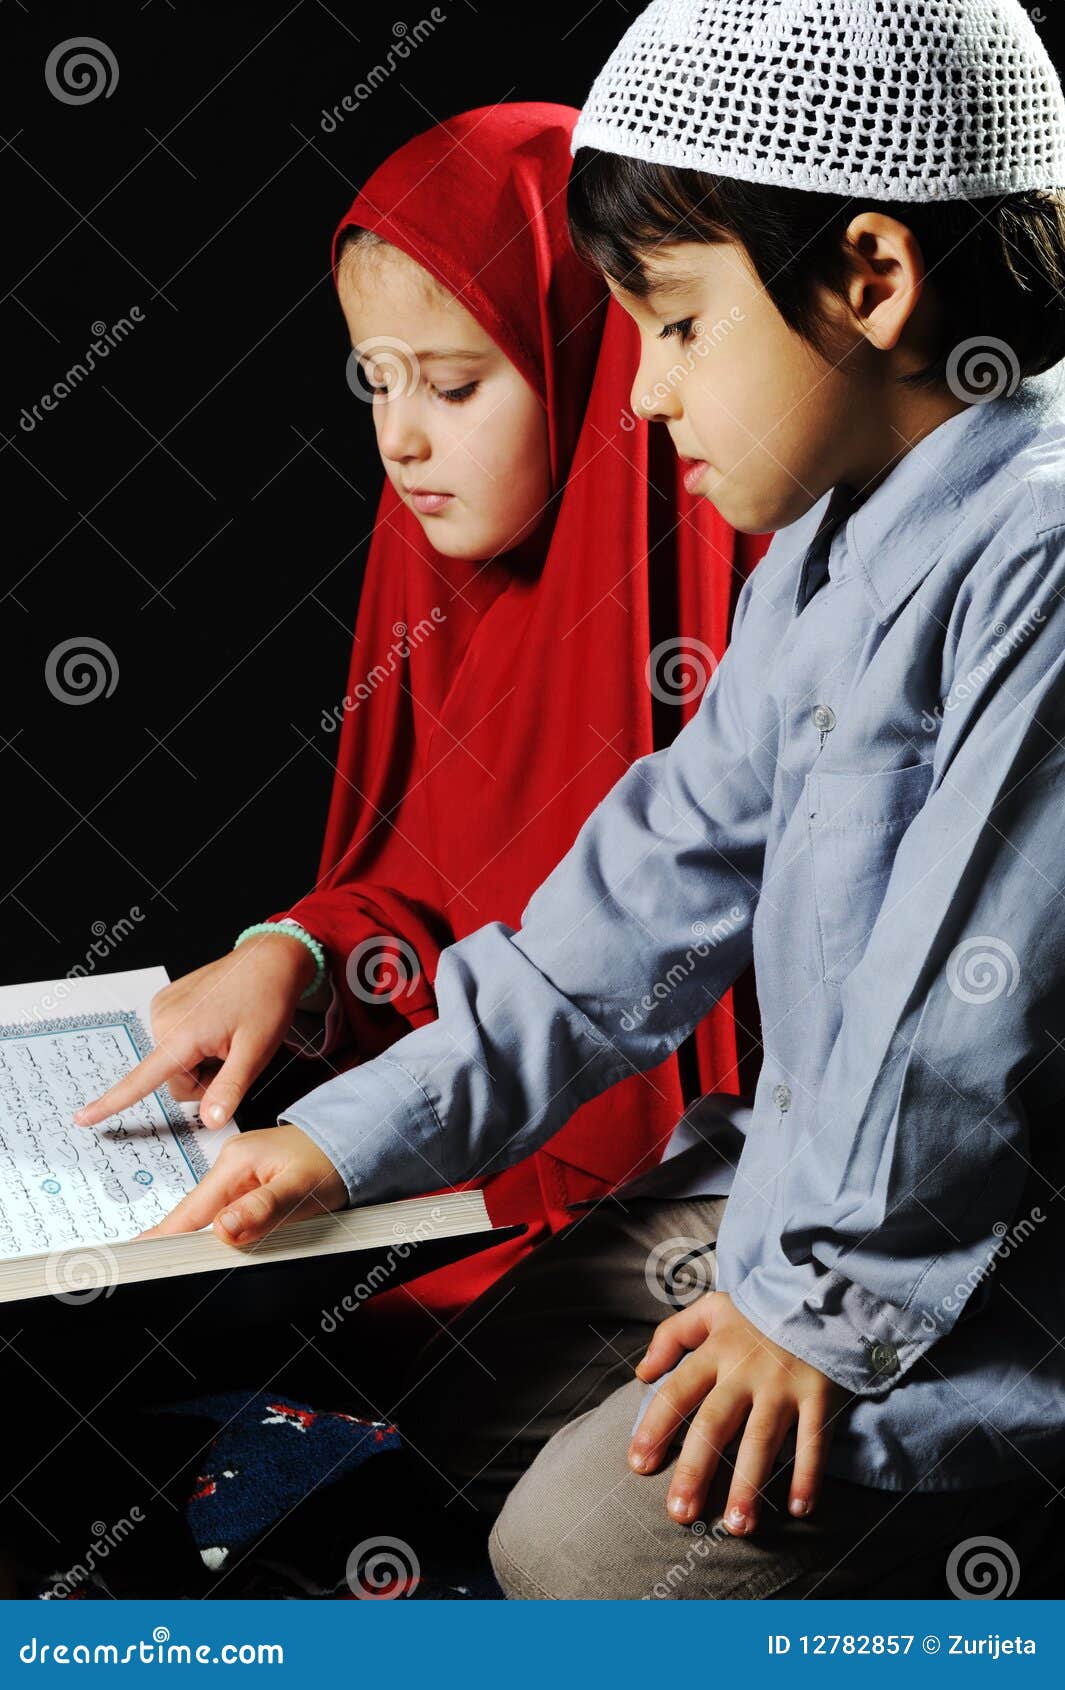 muslim girl and boy on black background